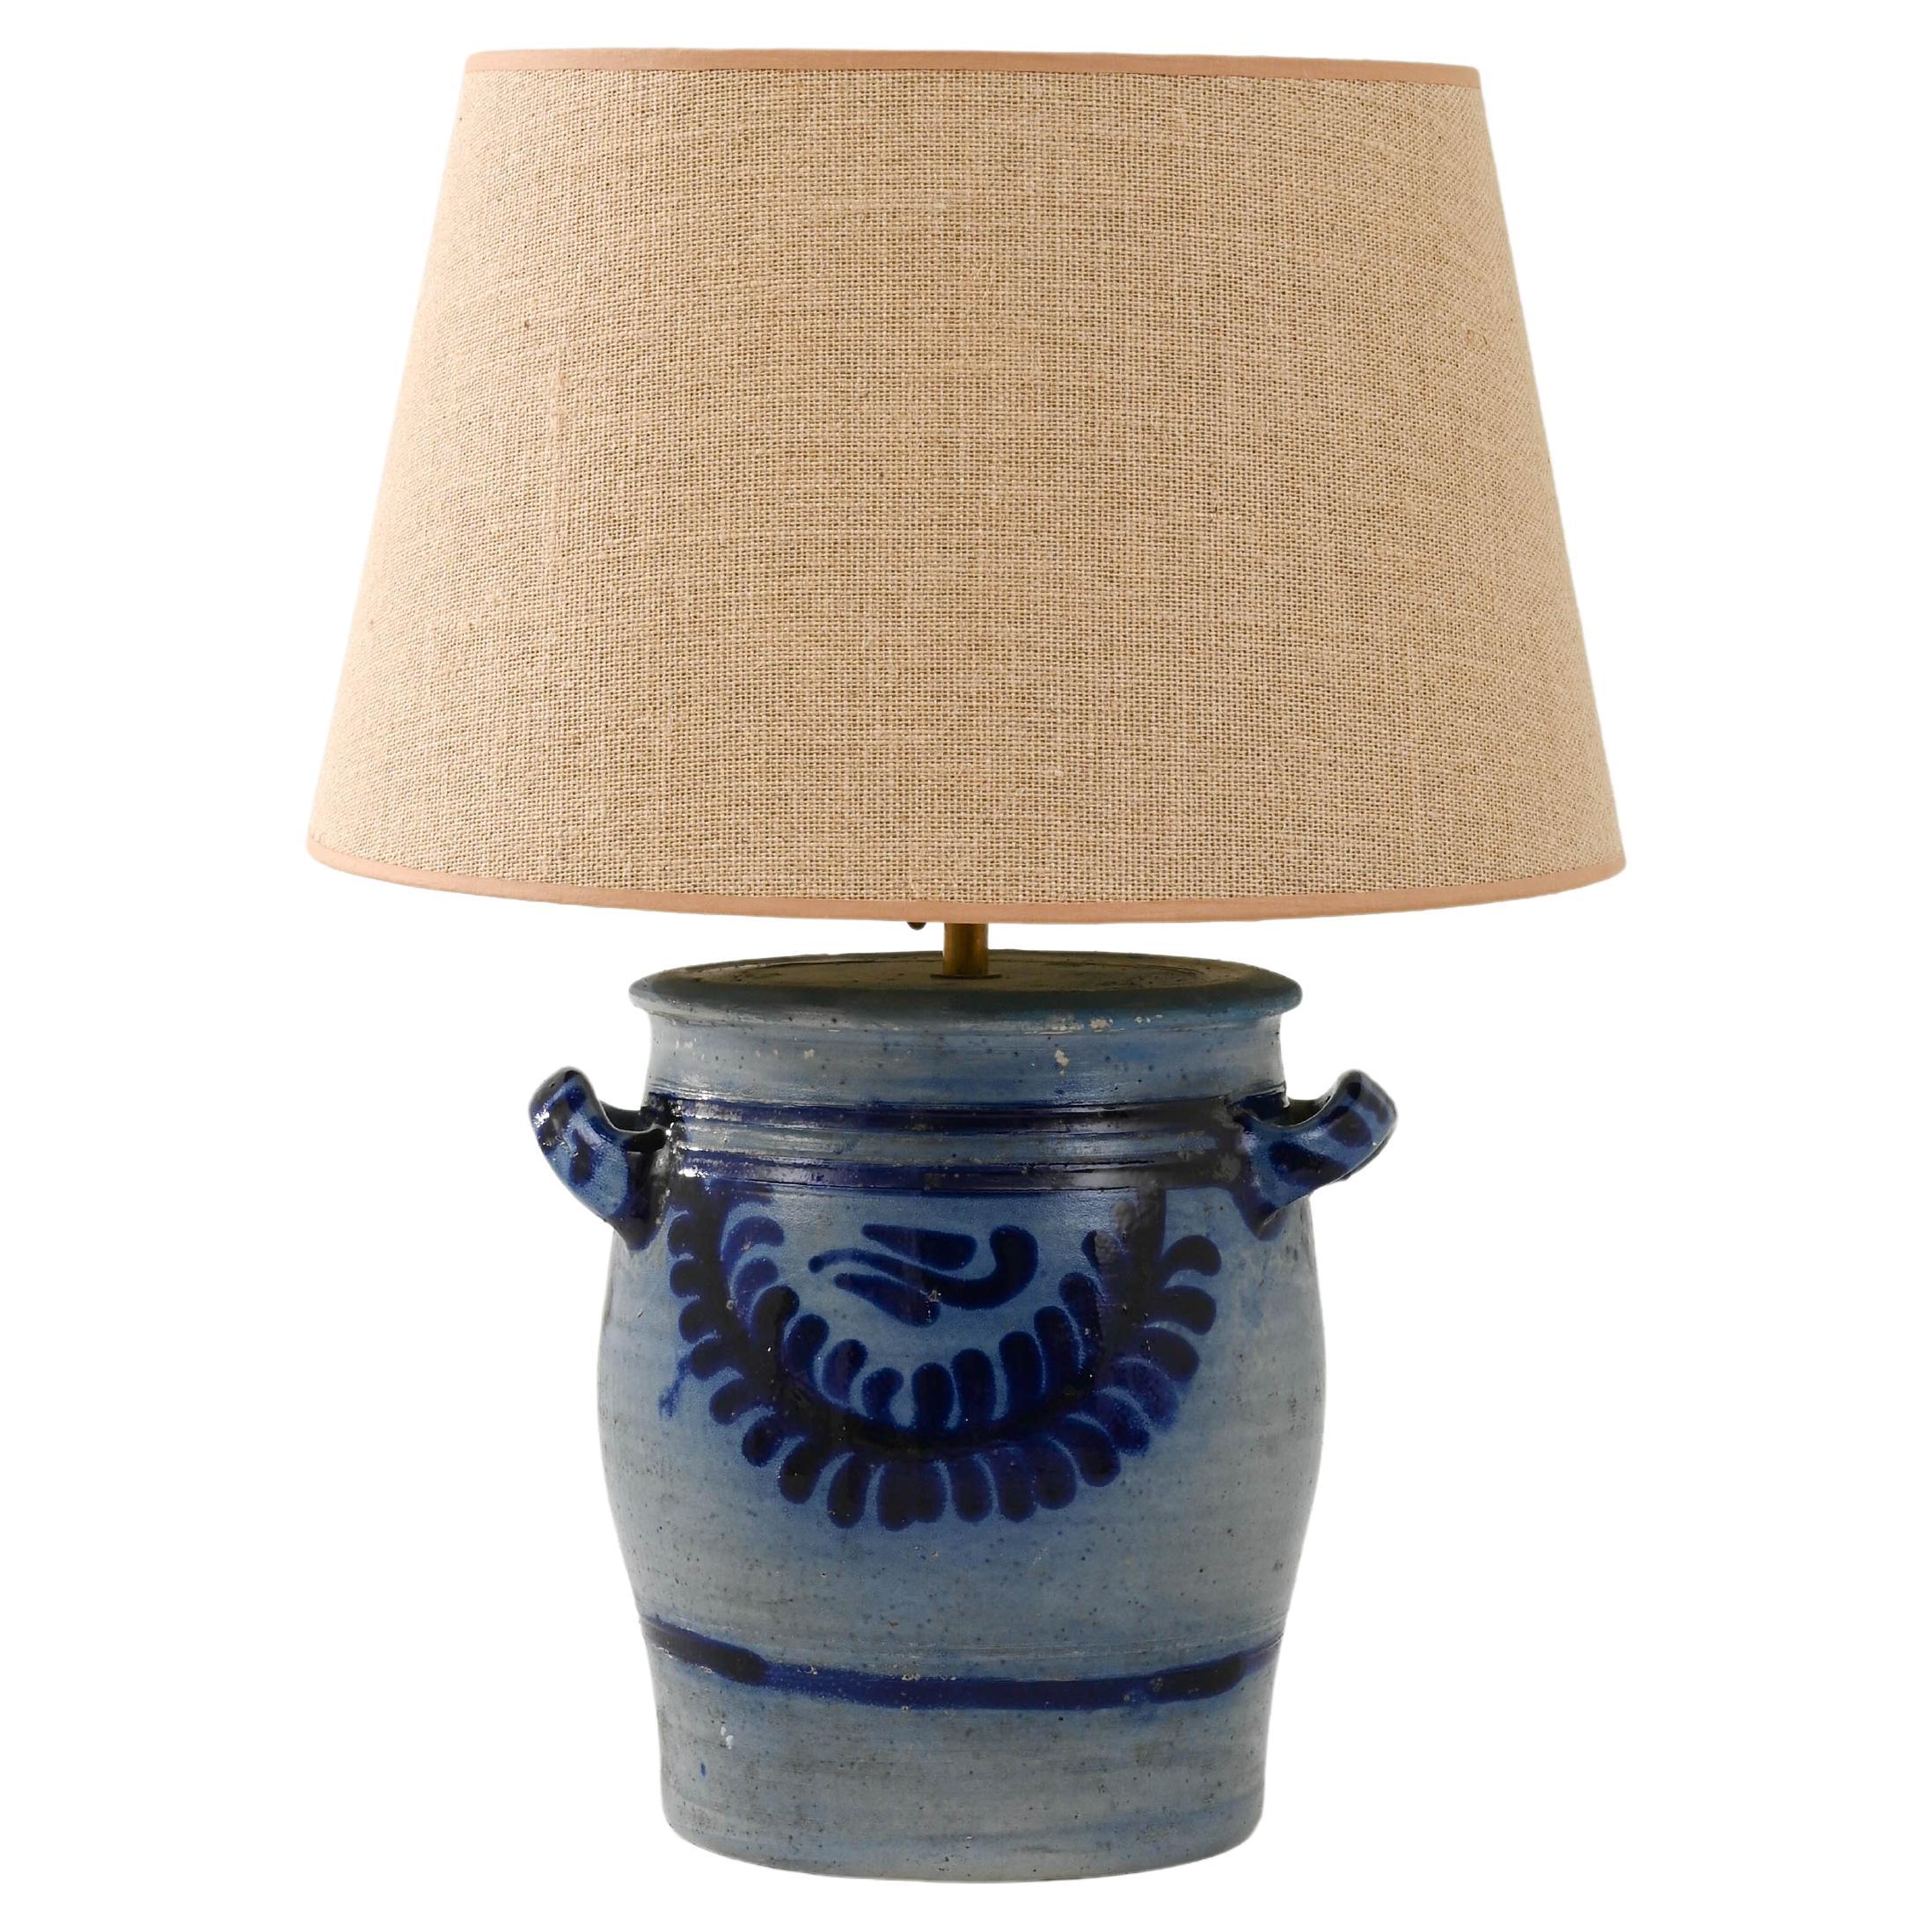 Vintage Belgian Ceramic Vase Table Lamp